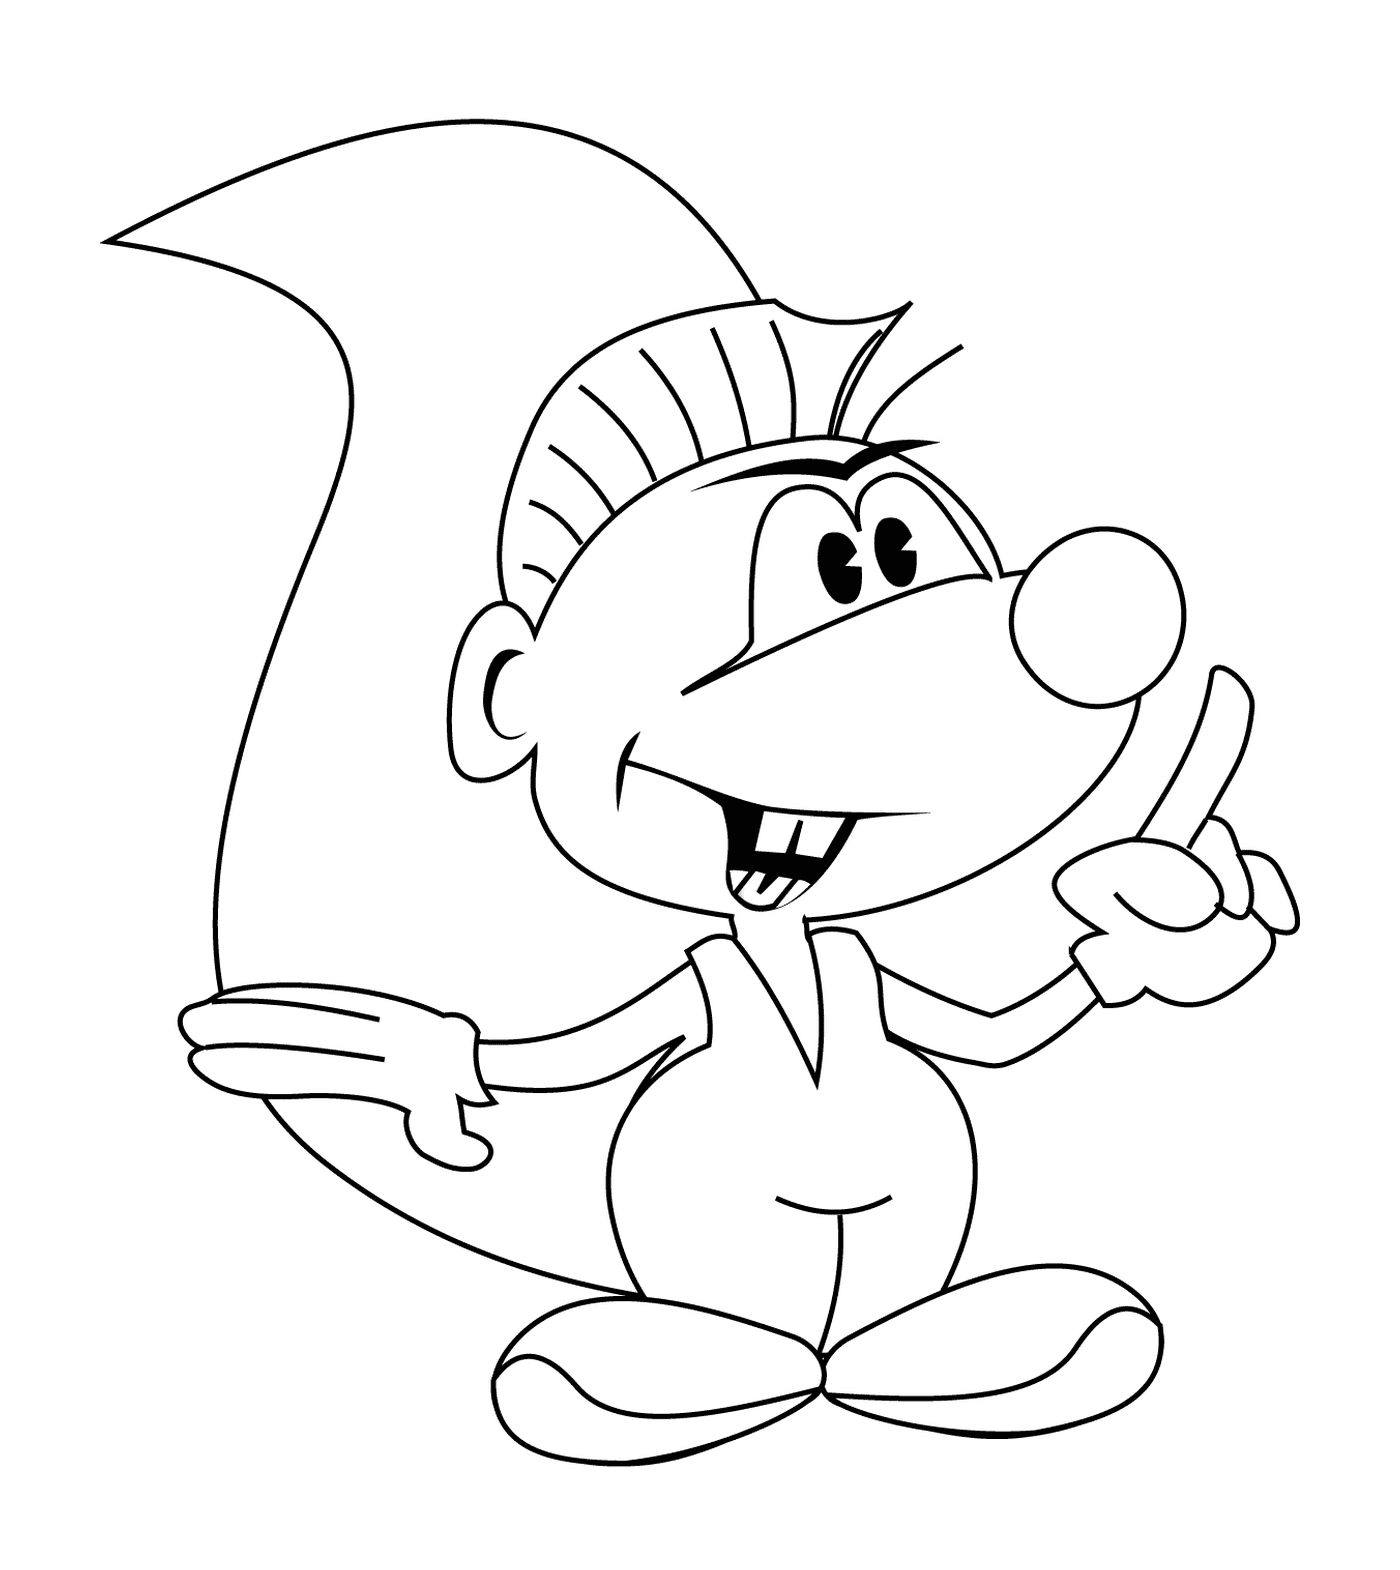  The squirrel in cartoon version 